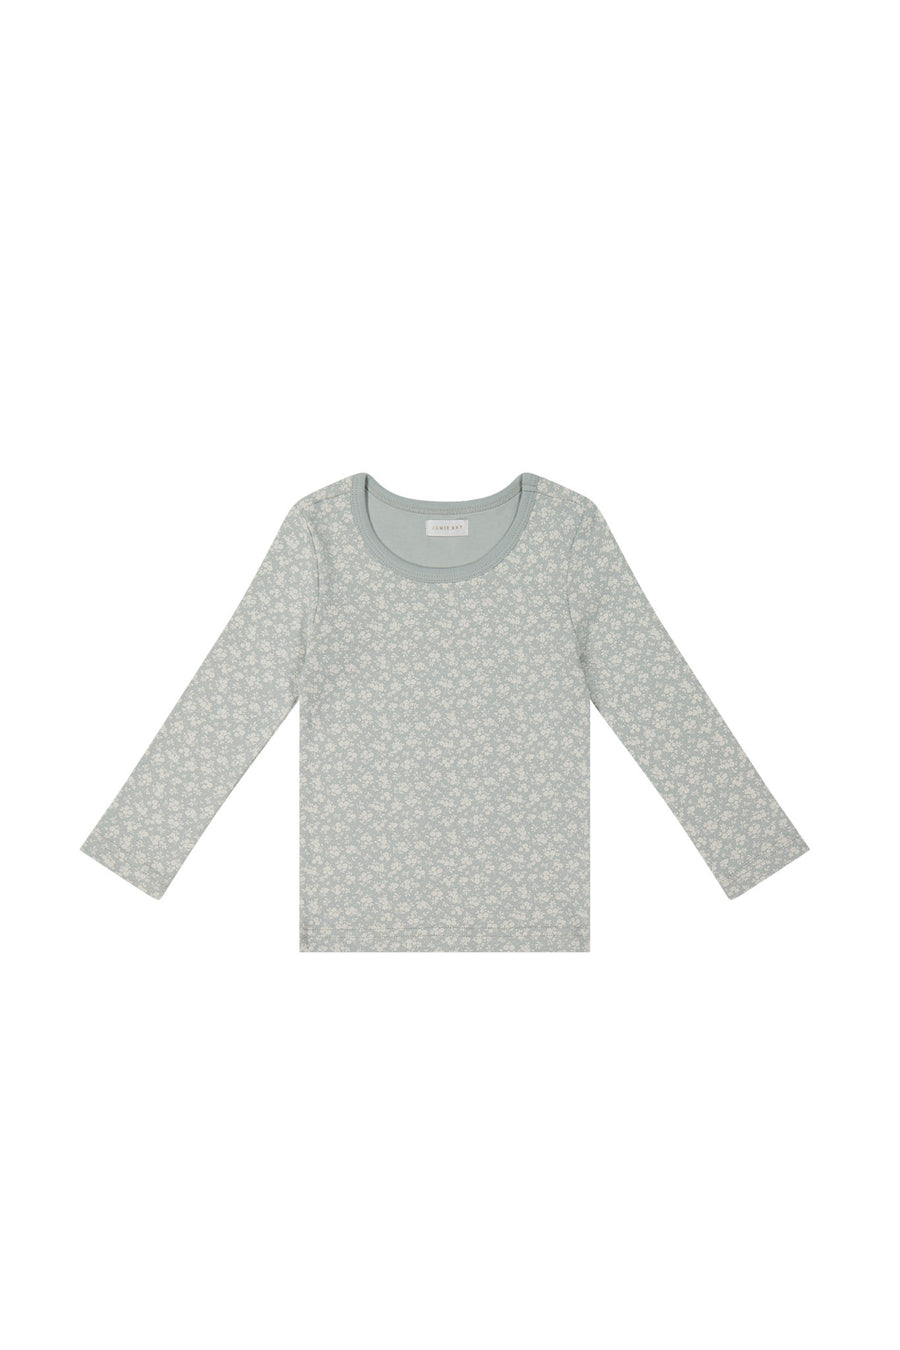 Organic Cotton Bridget Long Sleeve Top - Rosalie Fields Bluefox Childrens Top from Jamie Kay NZ